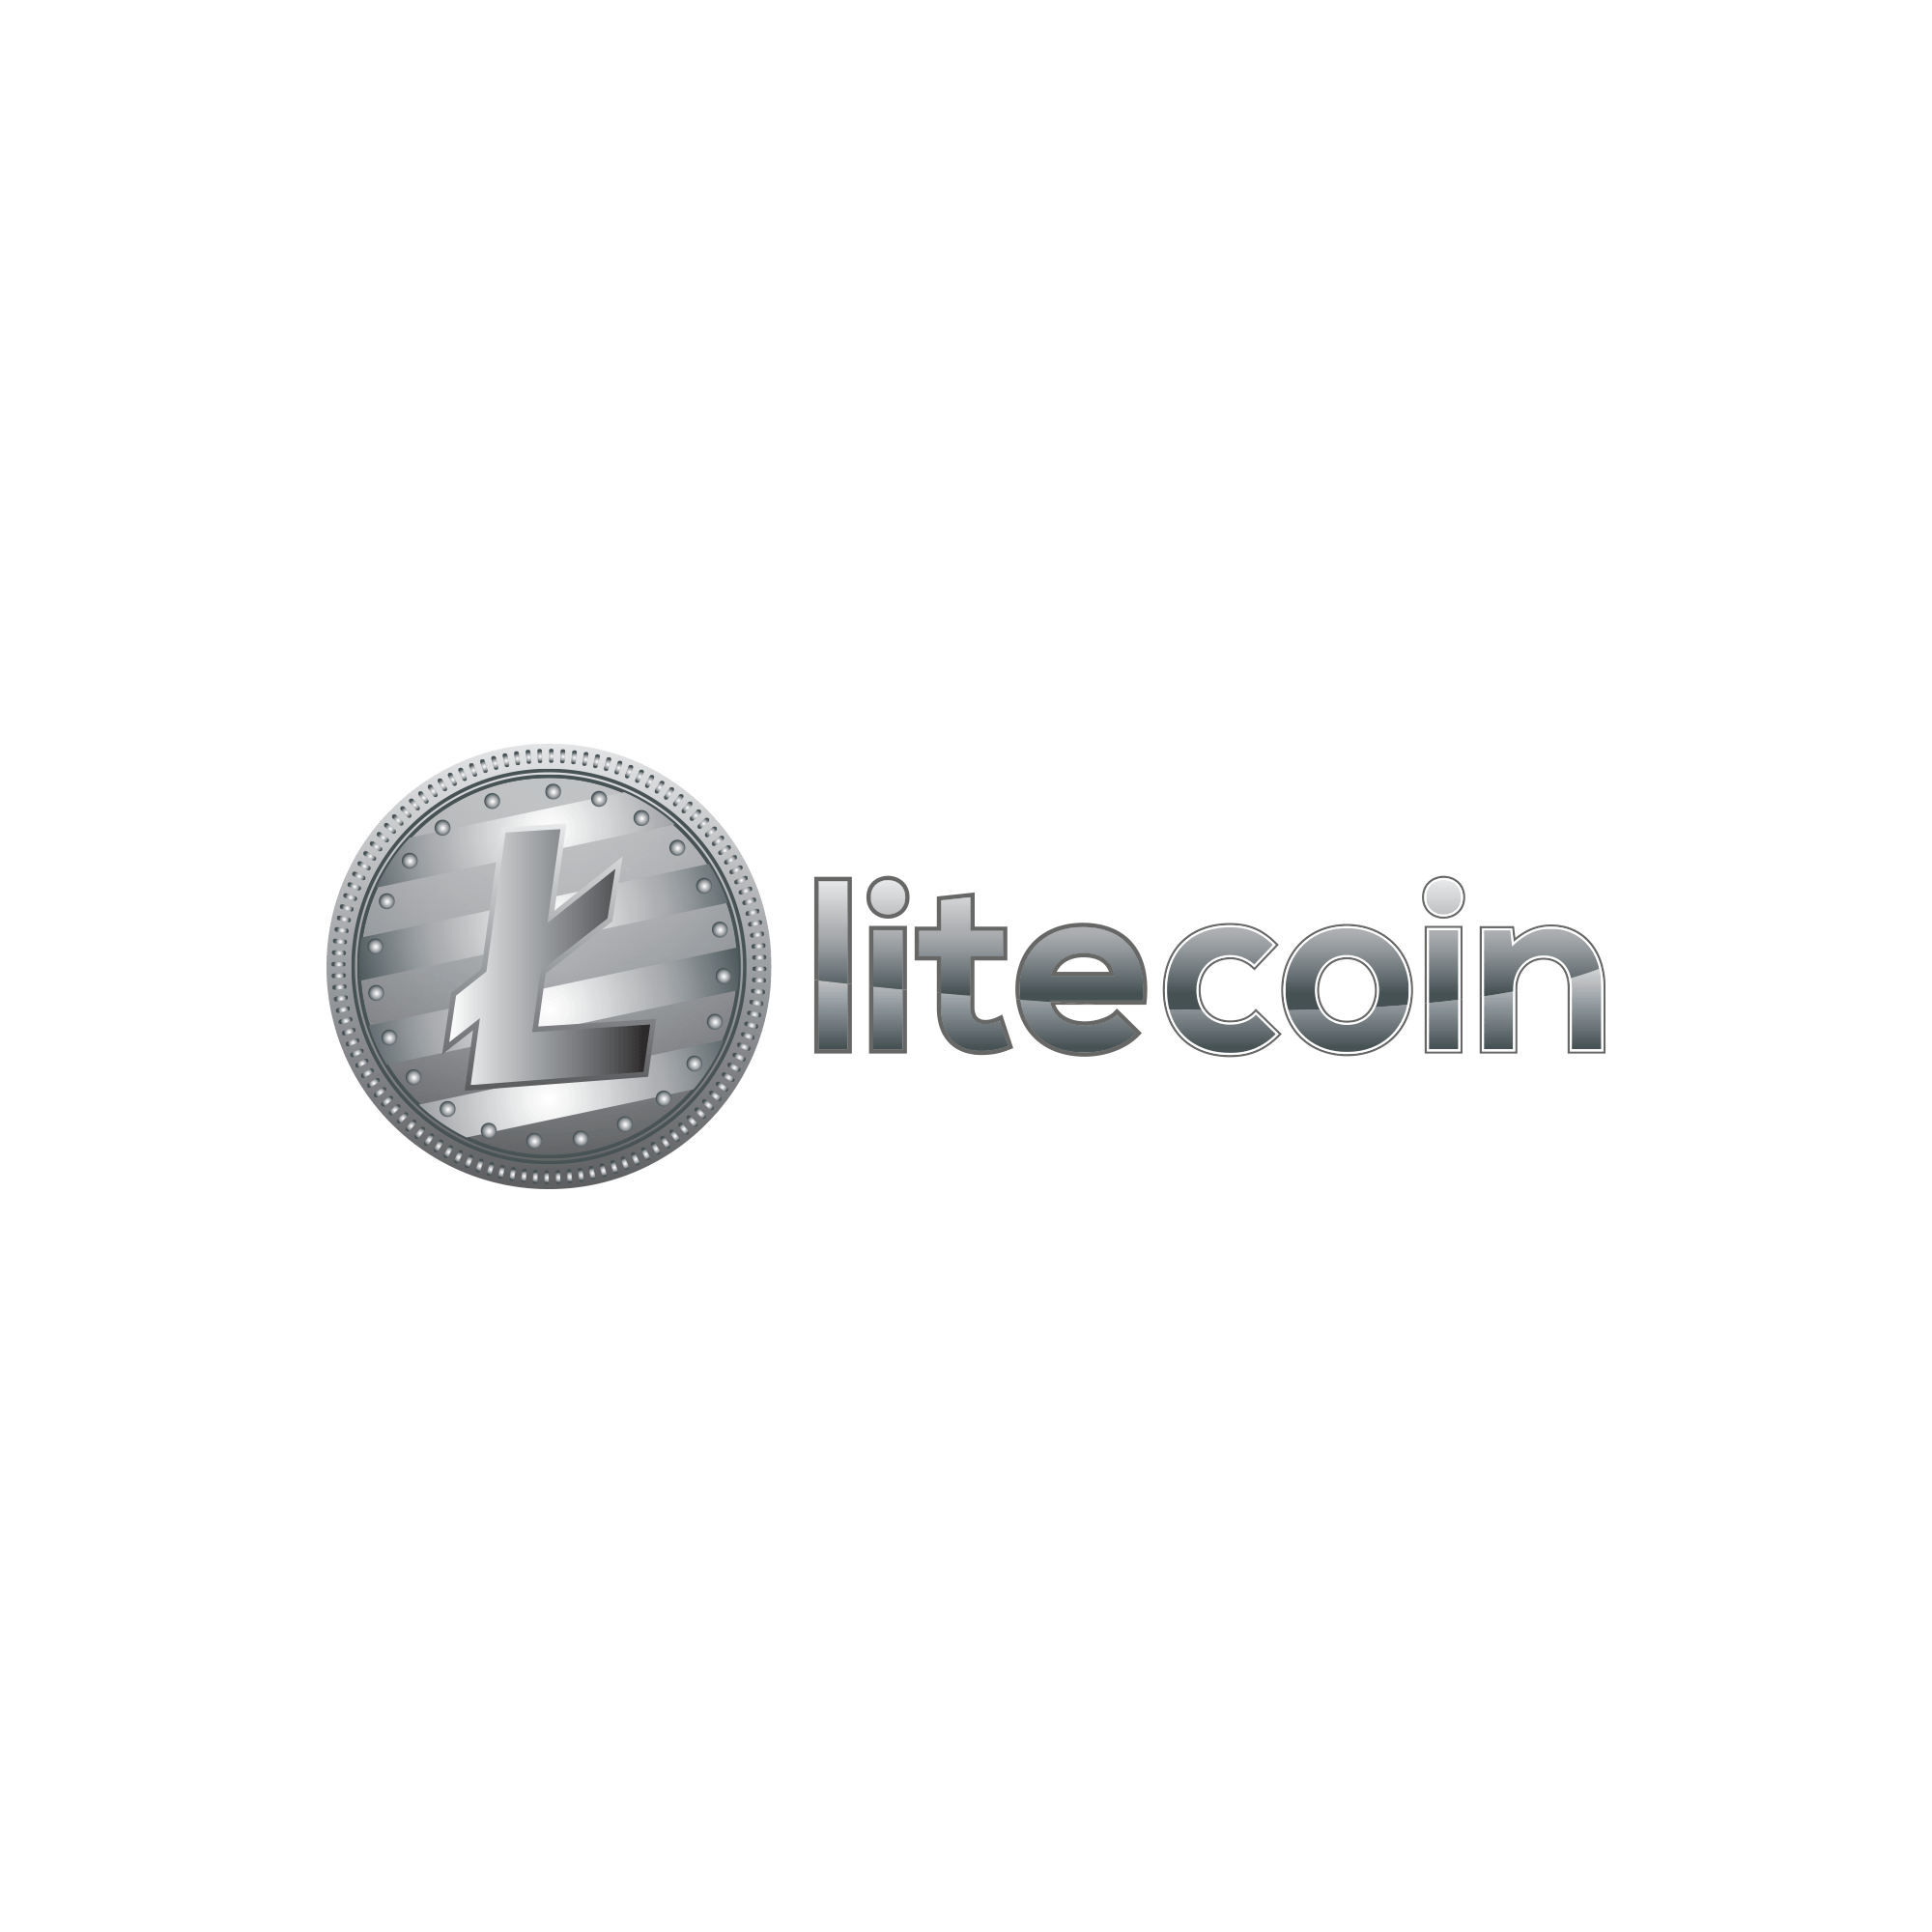 Litecoin Logo - Litecoin logo I had mocked up. Feel free to use it. : litecoin